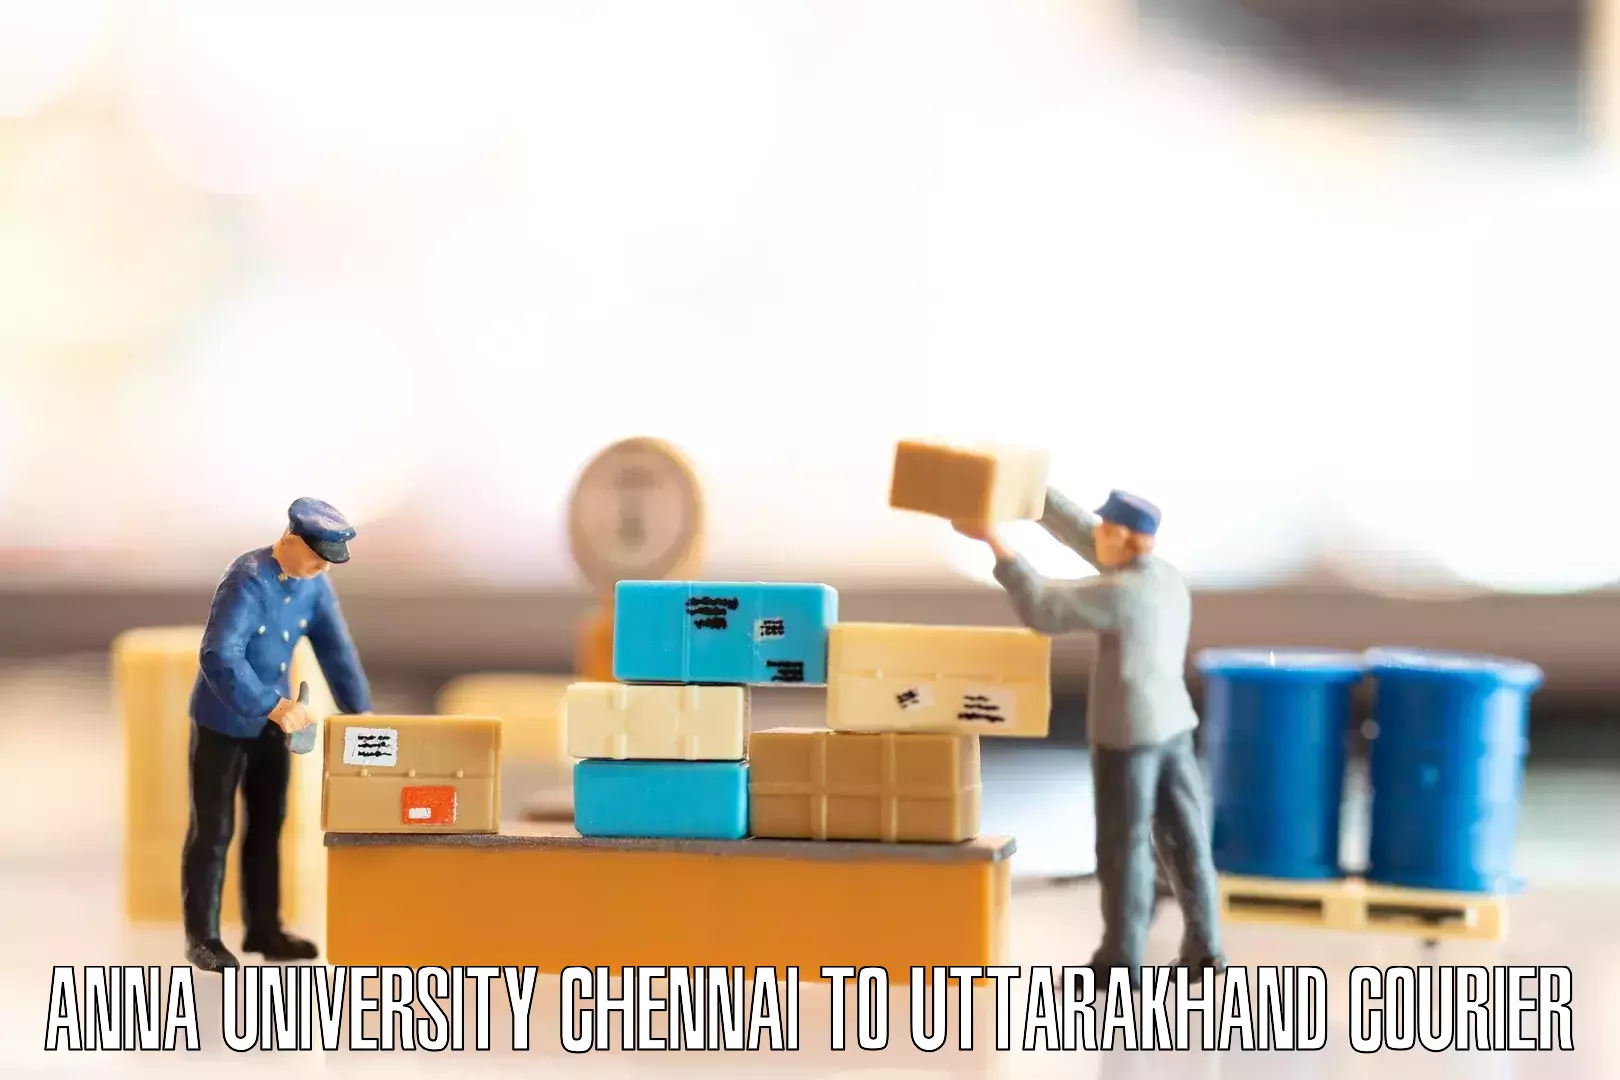 Furniture relocation experts Anna University Chennai to Lansdowne